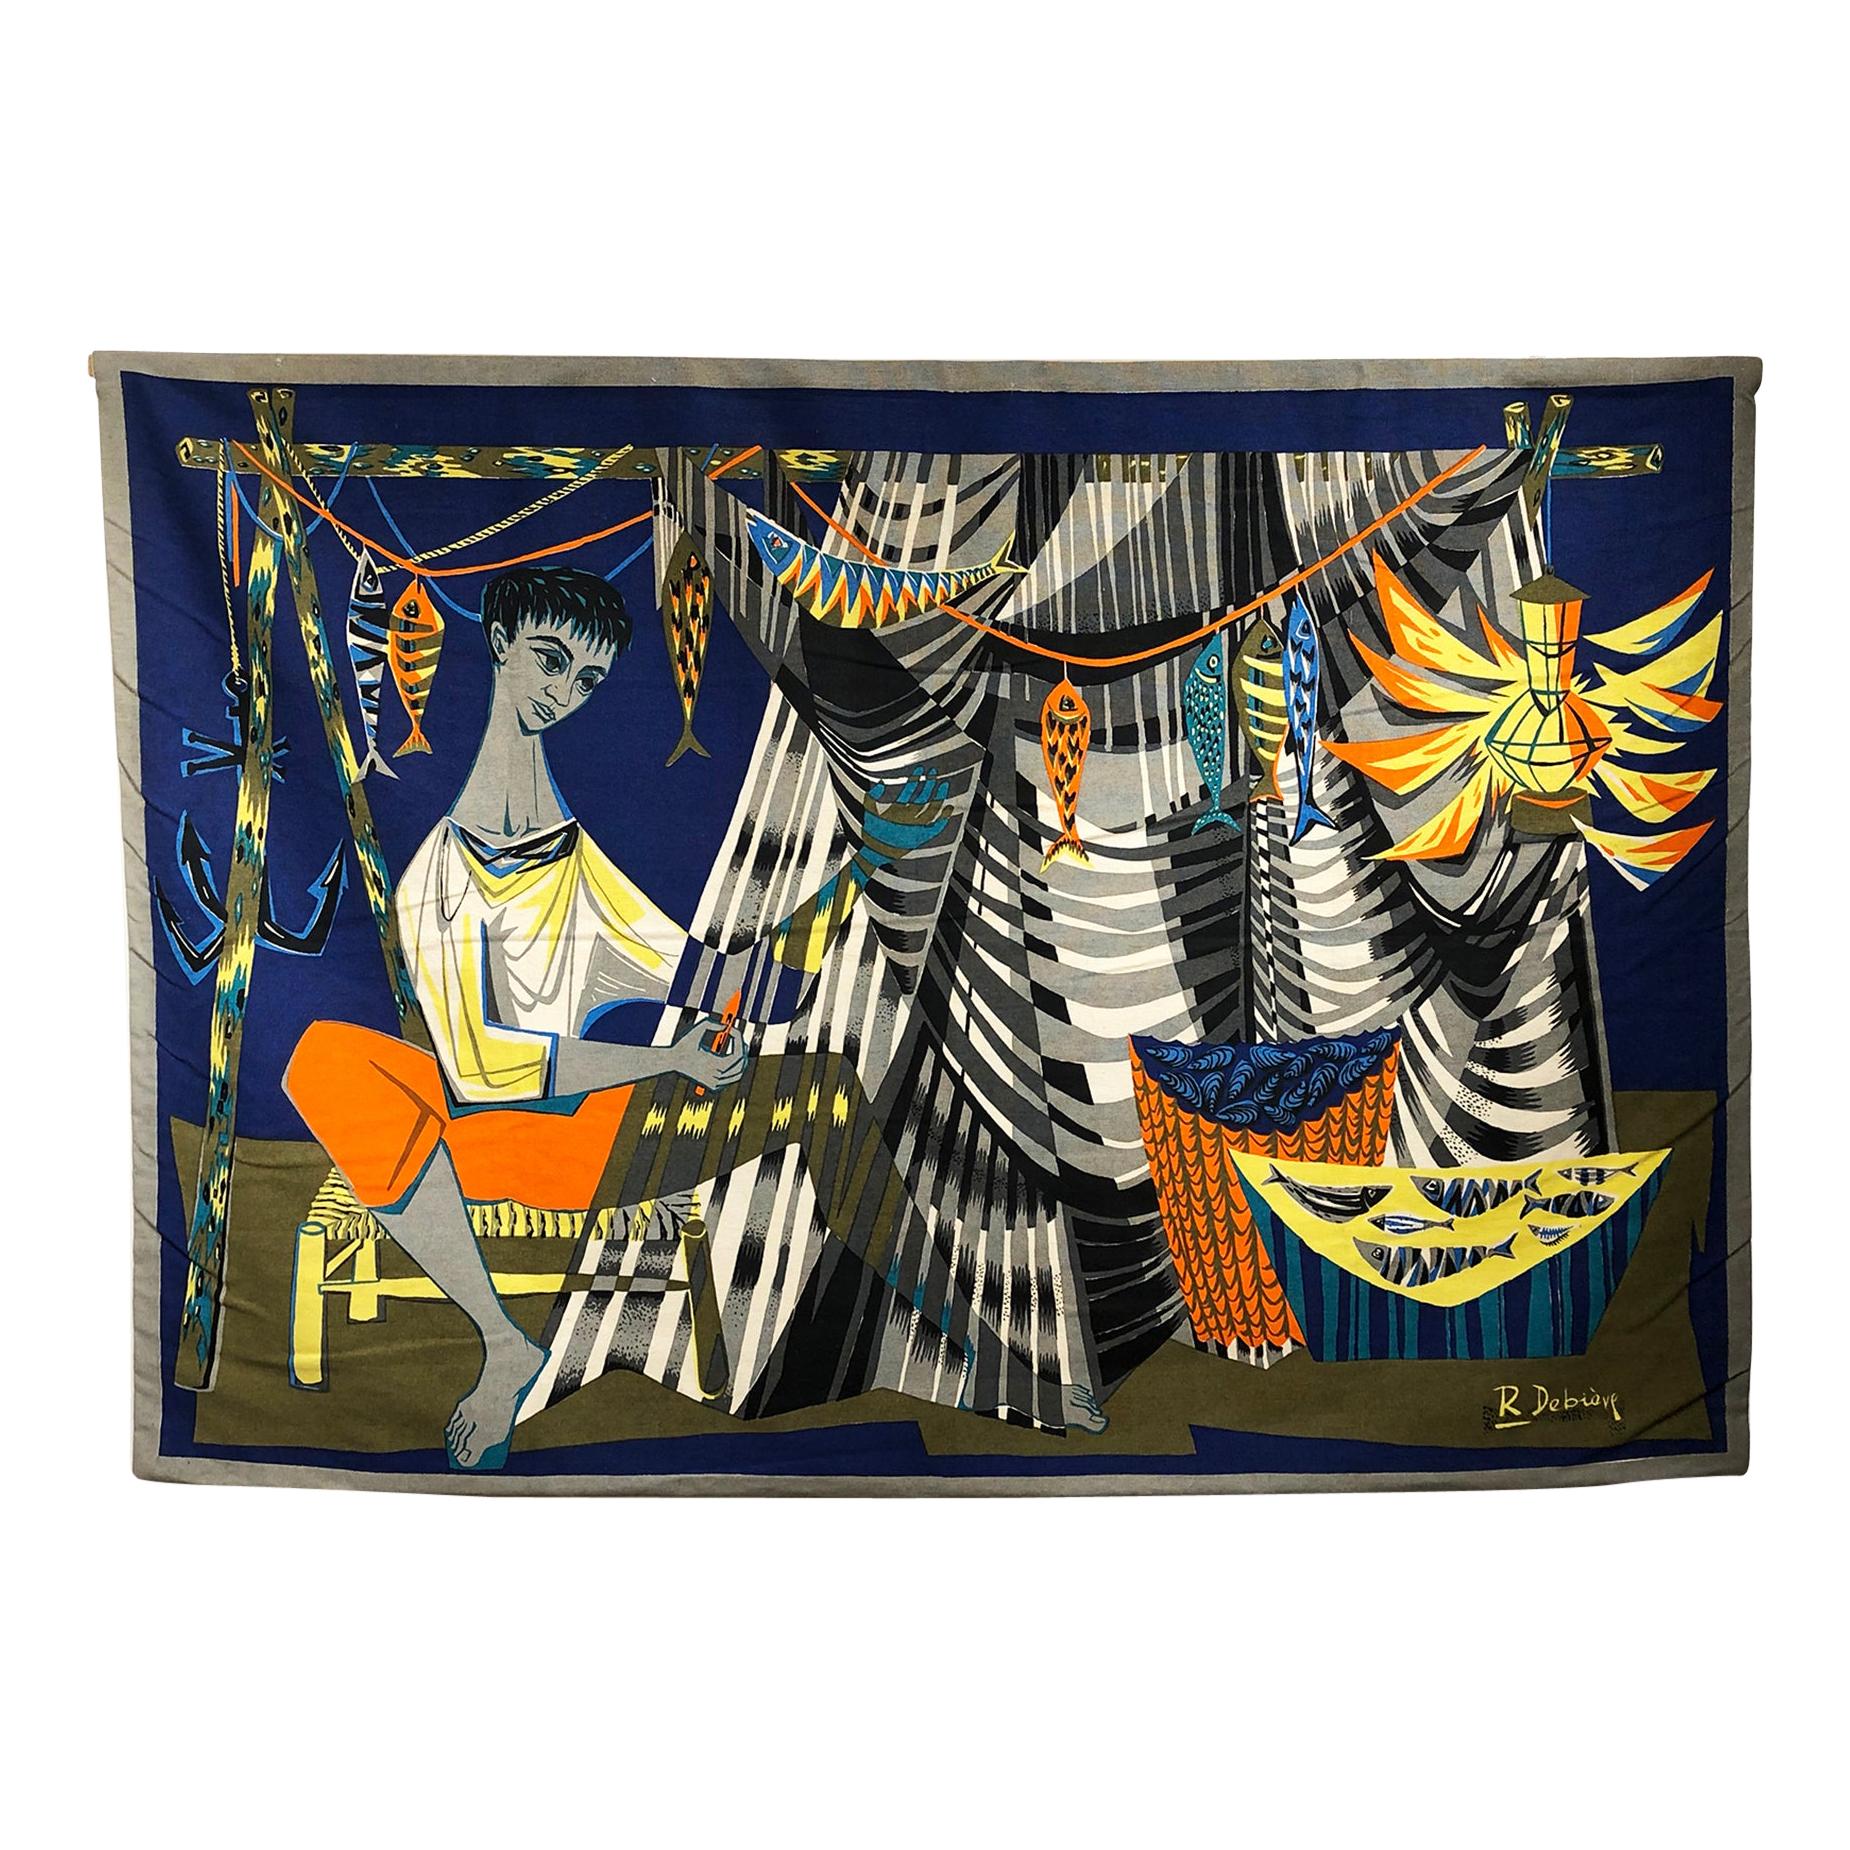 “Les remailleur de filets” Colorful Tapestry Signed “Robert Debieve”